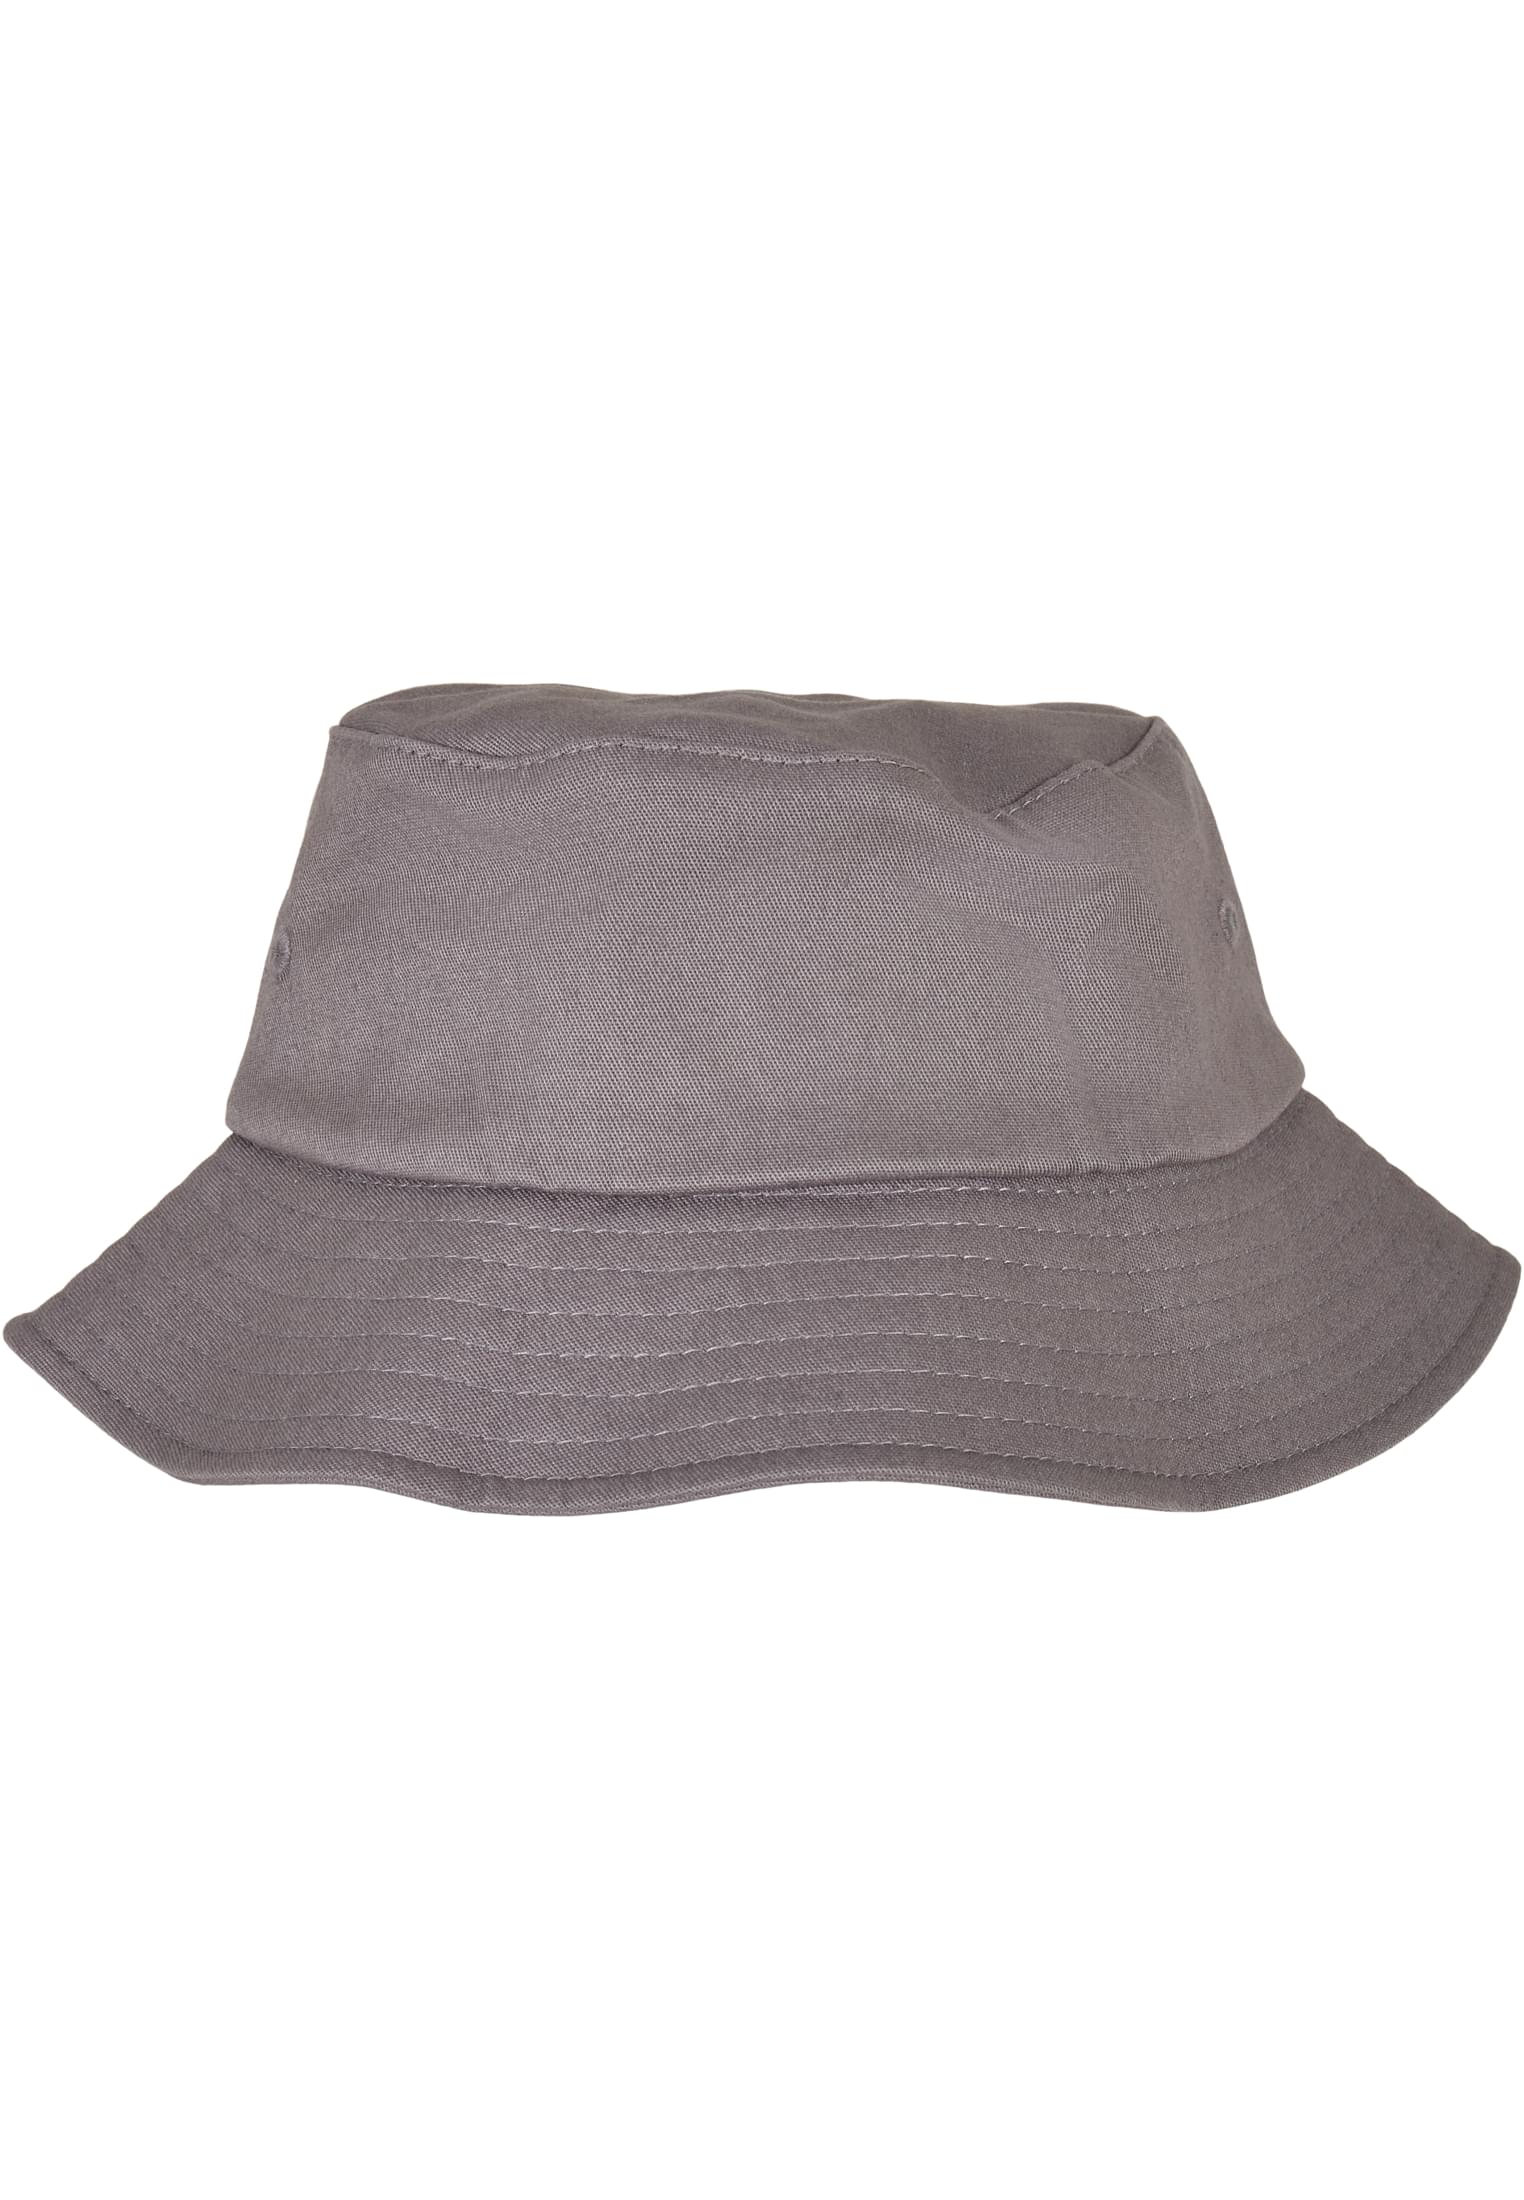 Kids Flexfit Cotton Twill Bucket Hat Kids in Farbe grey